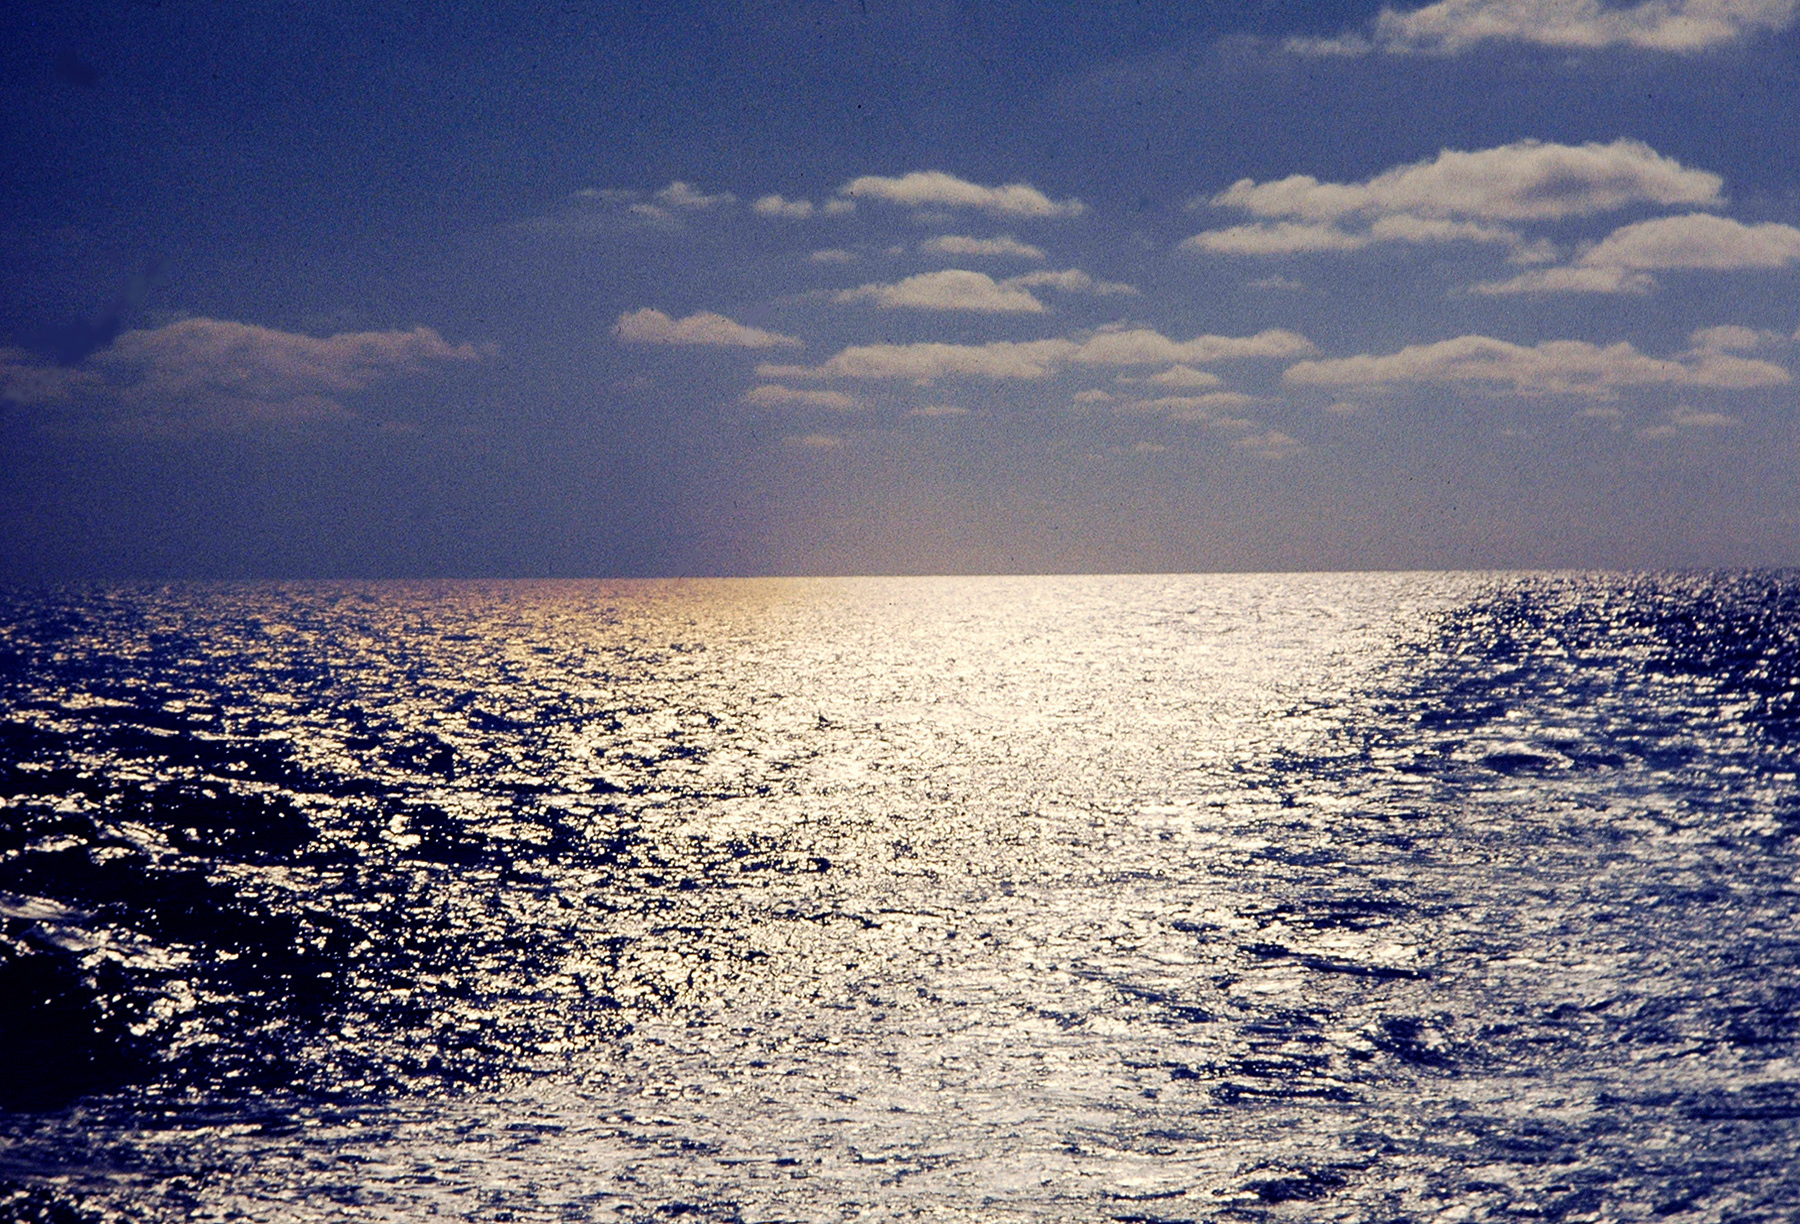 Eclipse 1973 - D18-Sun on the Ocean